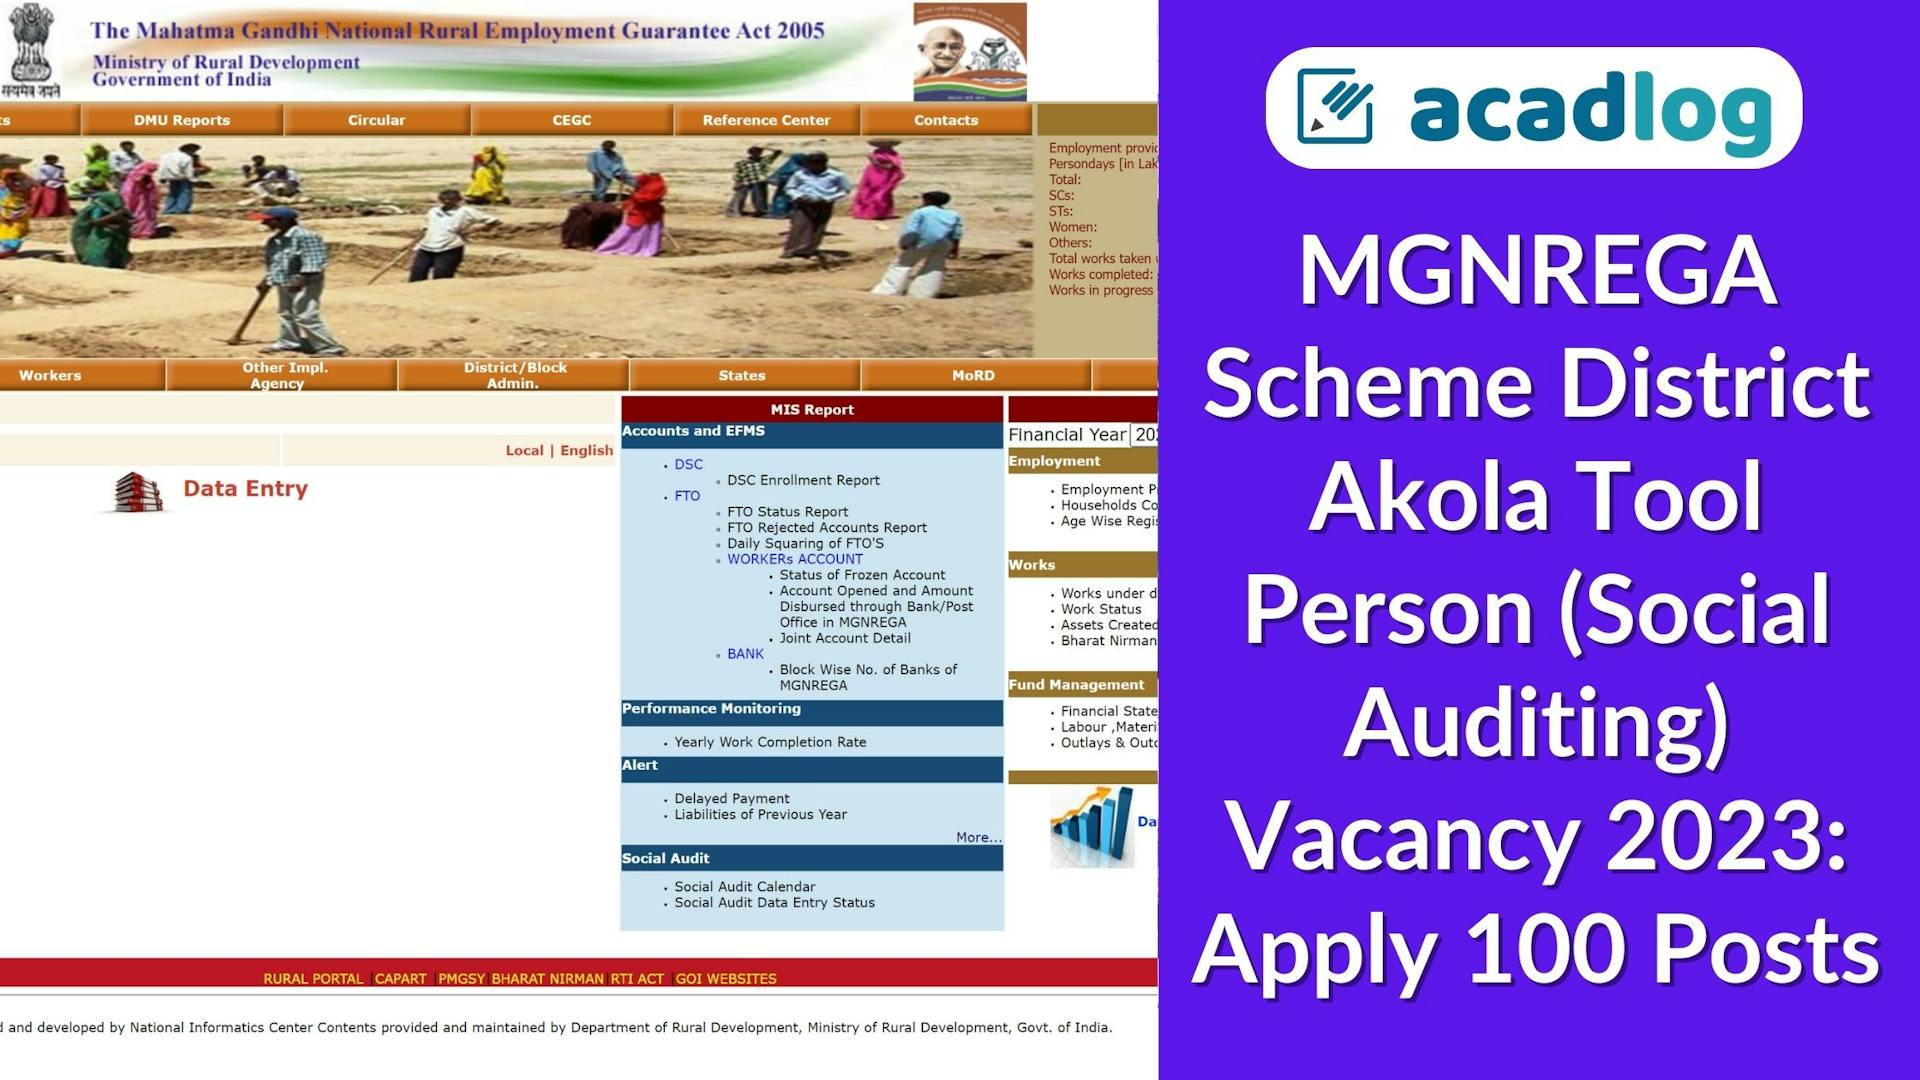 Akola Jobs: MGNREGA Scheme Tool Person (Social Auditing) Vacancy 2023